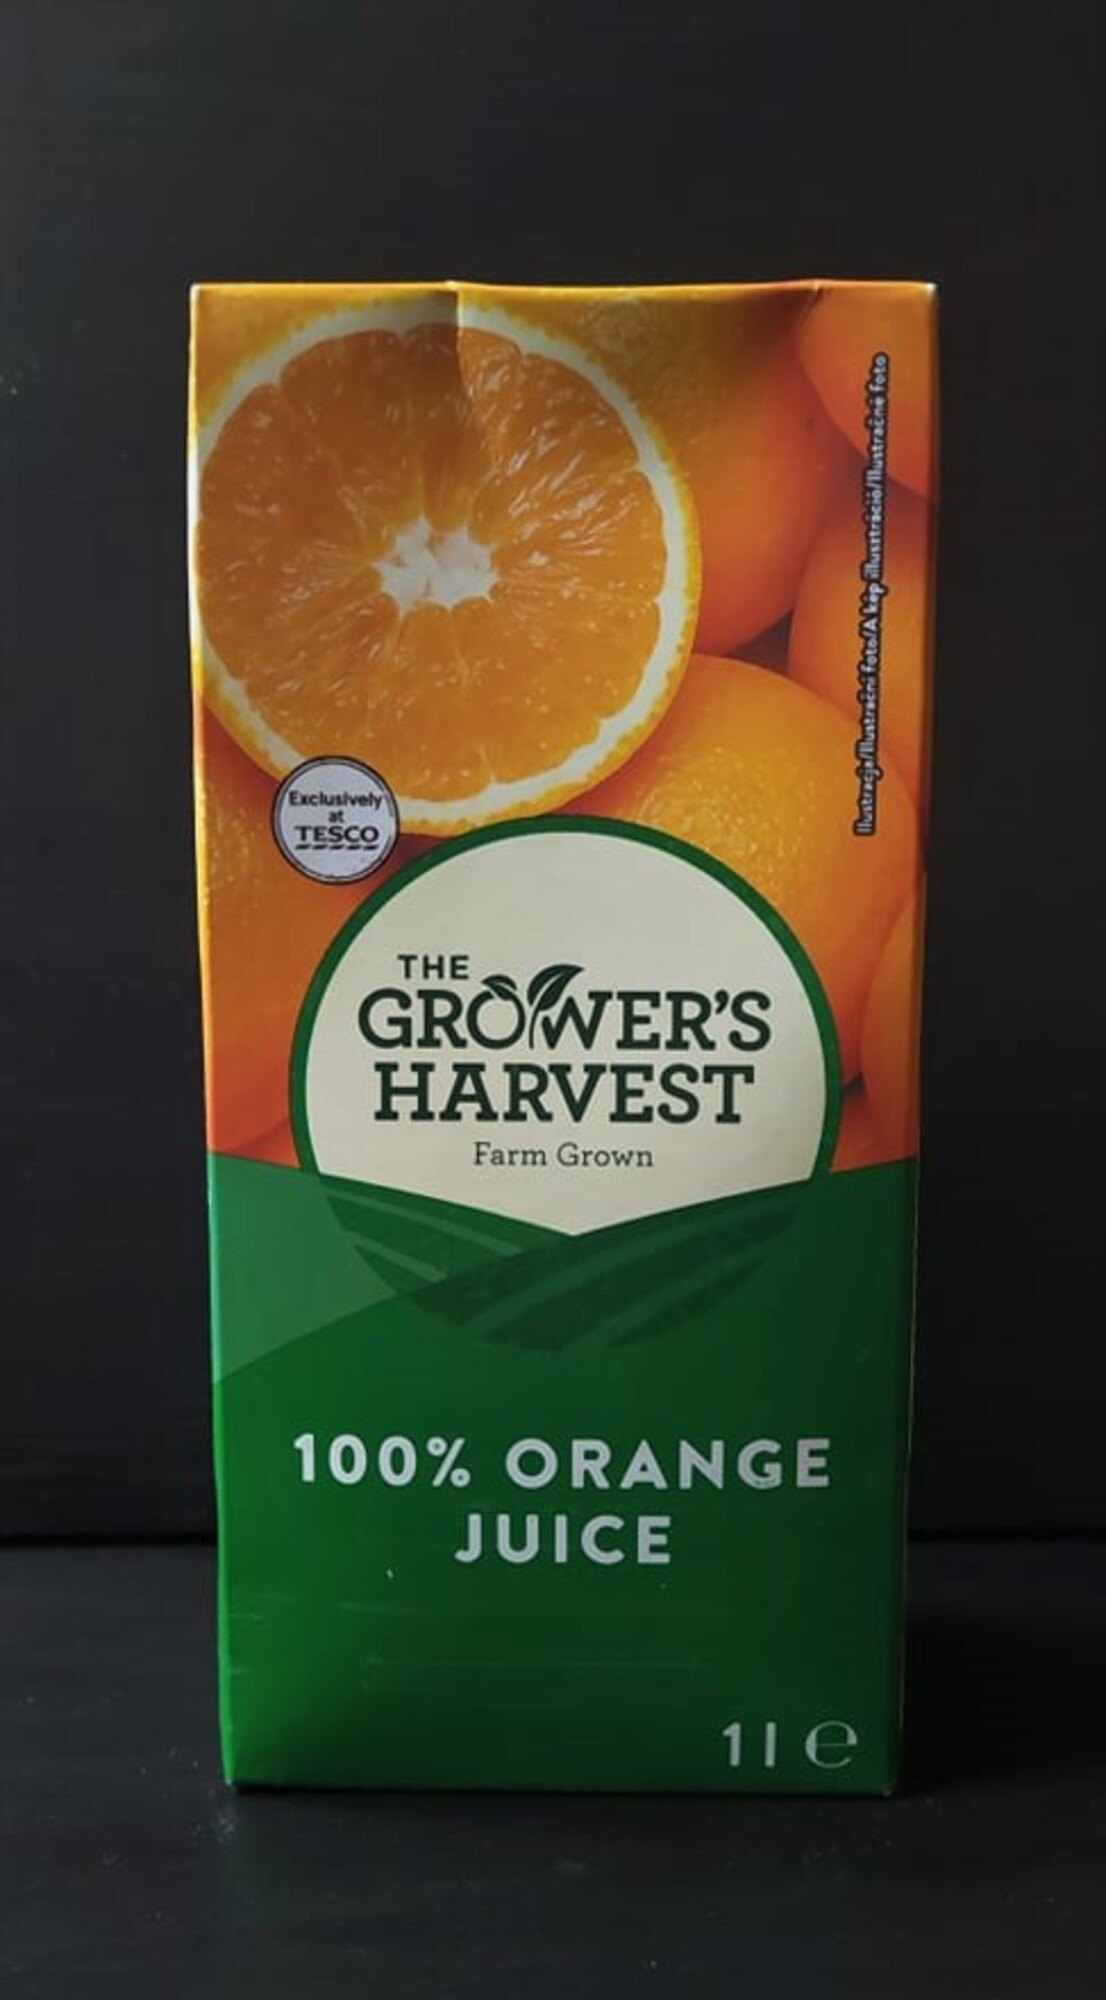 džus test pomeranč 2020 grower's